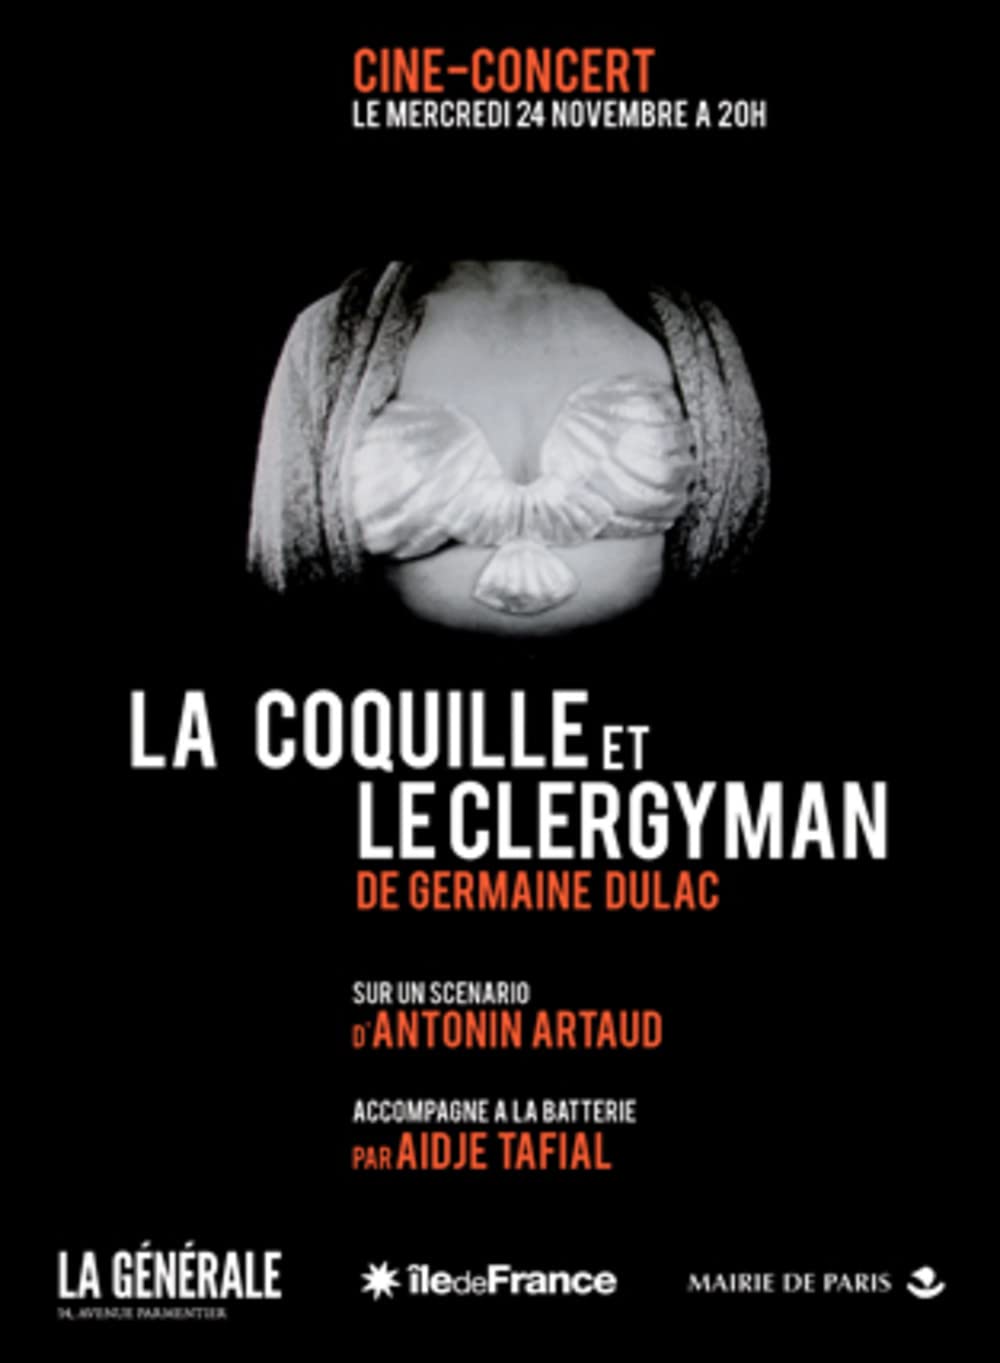 Filmbeschreibung zu La Coquille et le clergyman